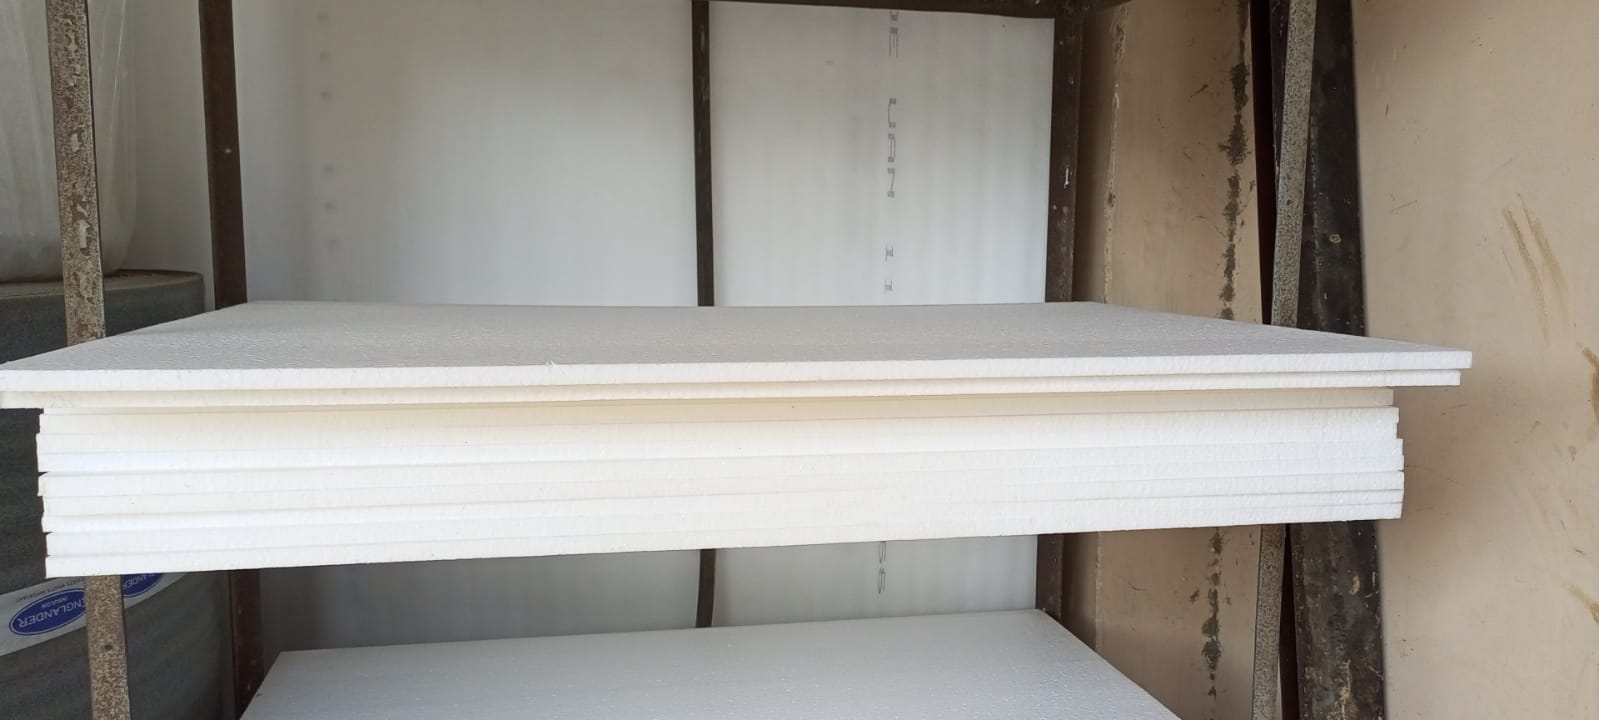 White Styrofoam Sheet - 24"x36" - 0.5" (12 mm) - 10 Sheets